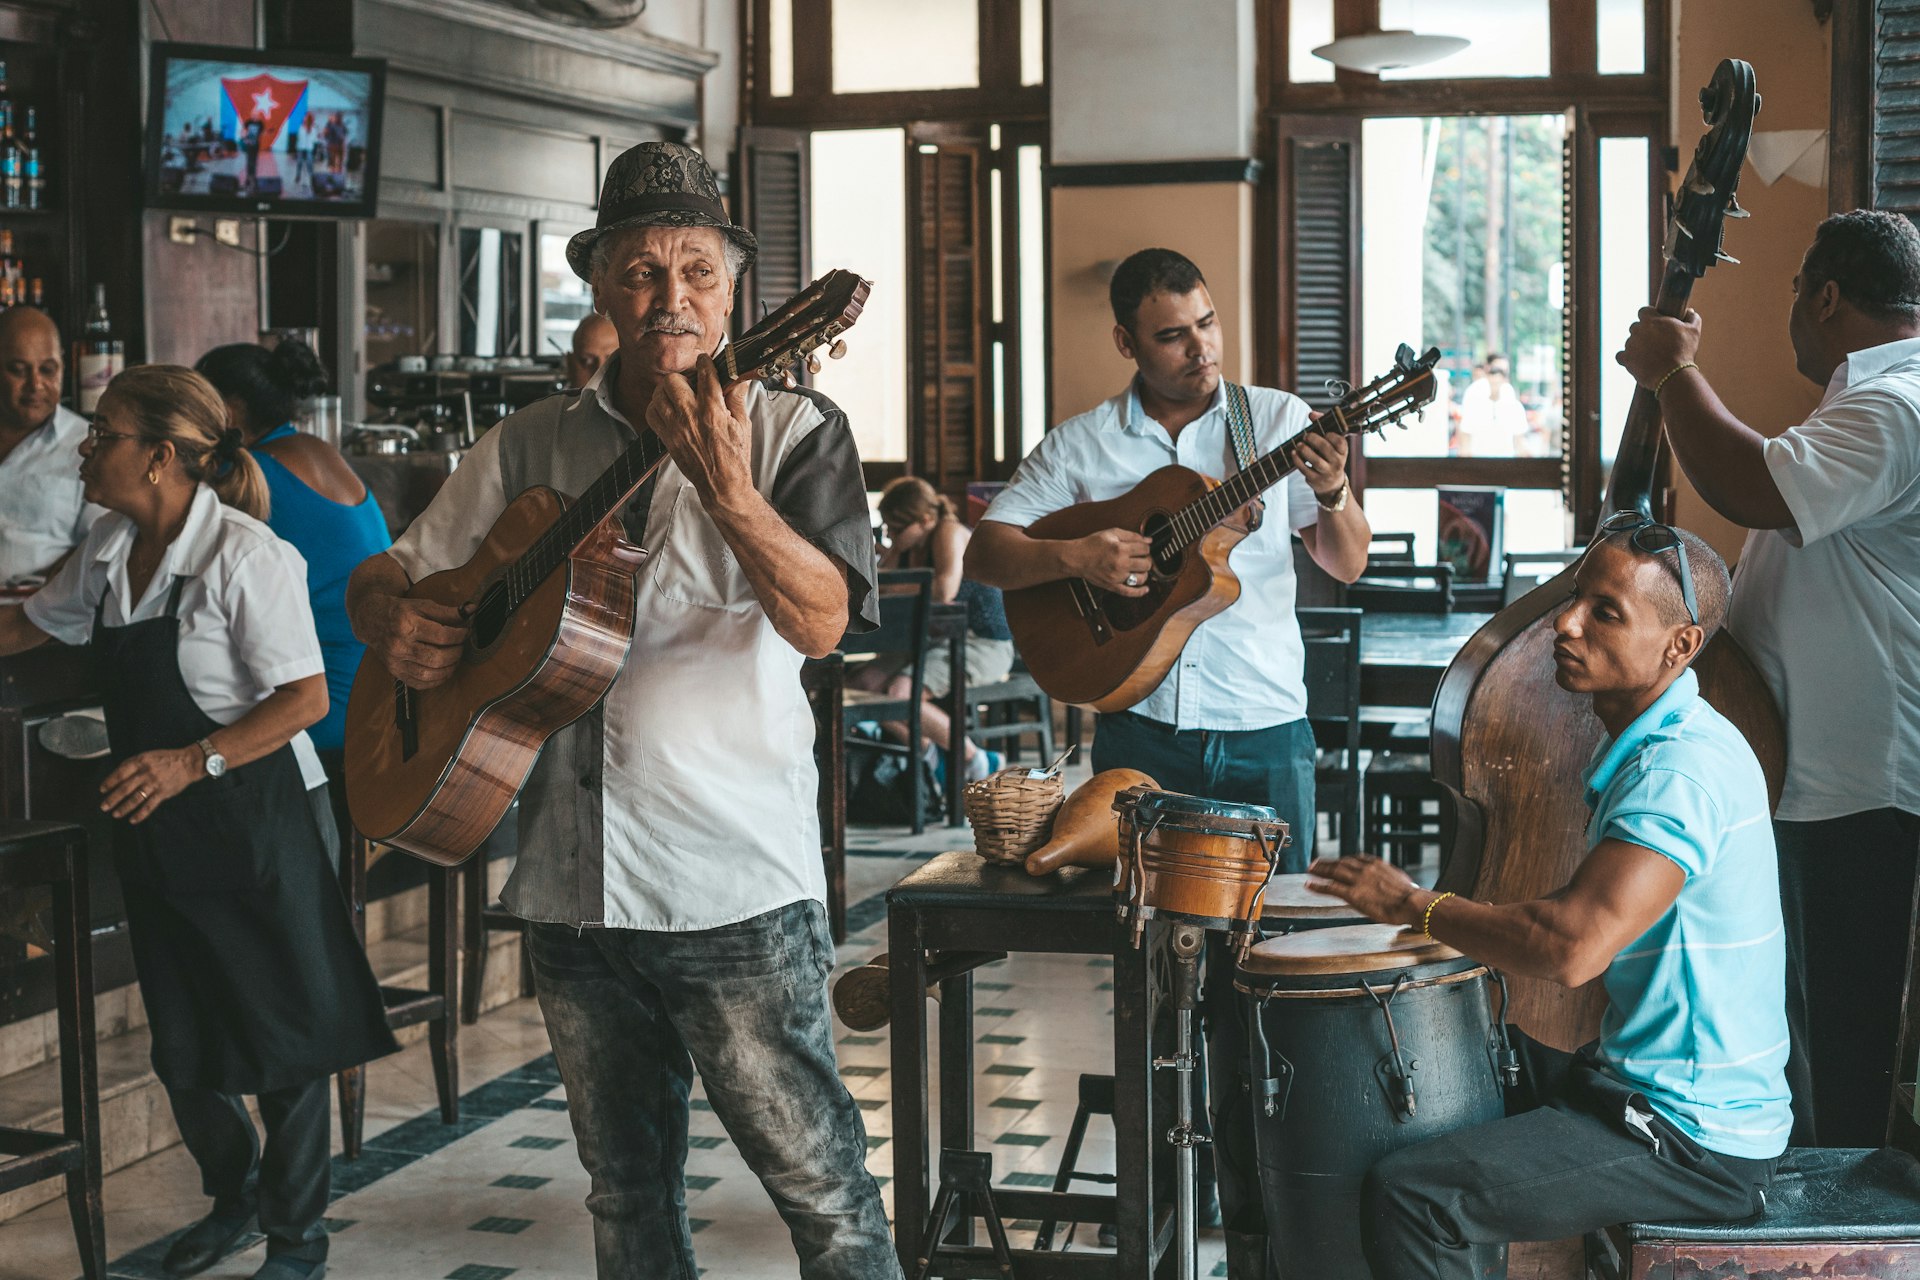 Cuban band performing in a bar in Havana